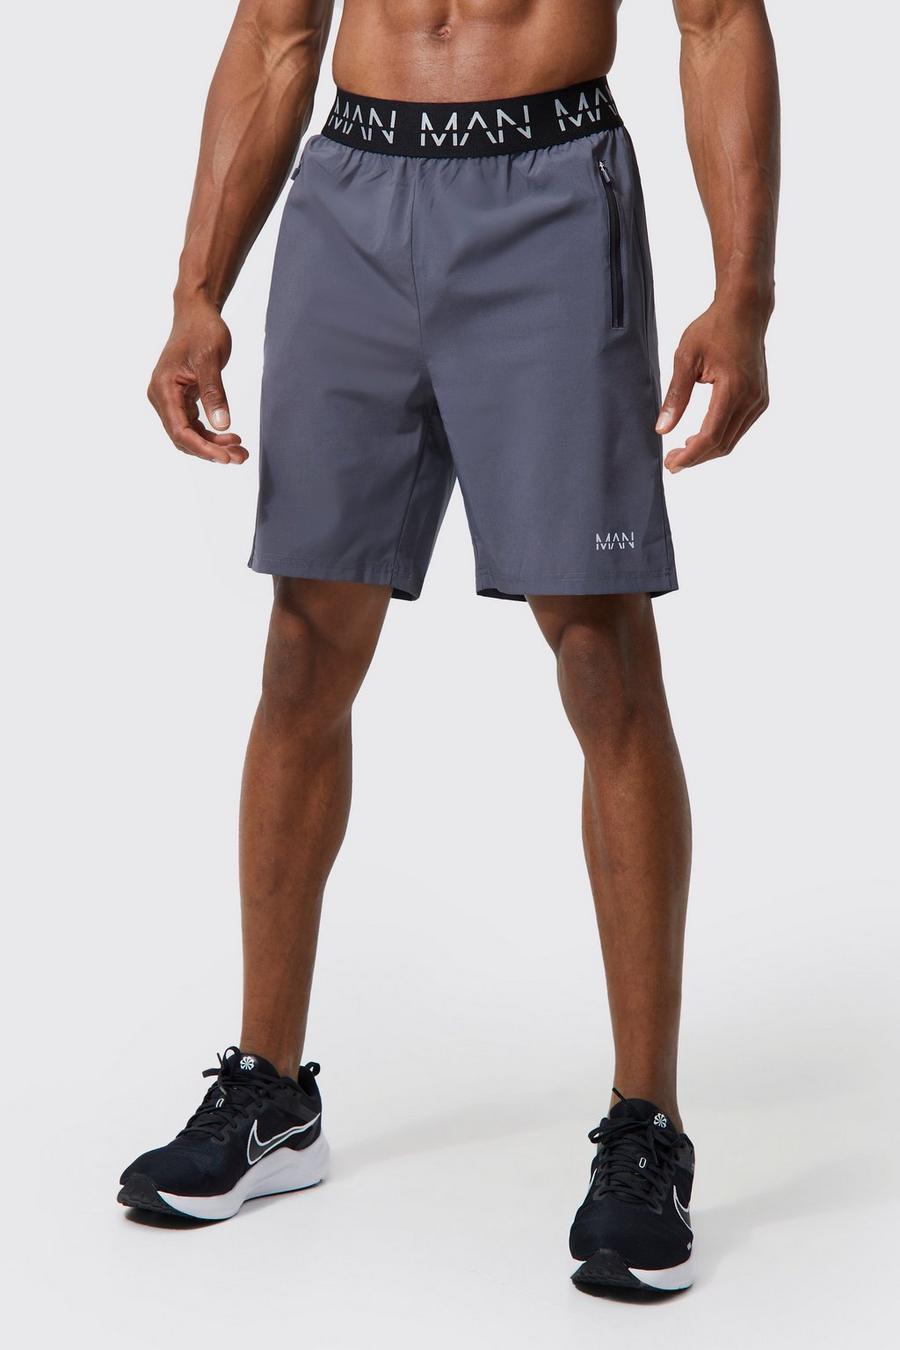 Pantaloncini Man Active Gym con tasche e zip - set di 2 paia, Multi